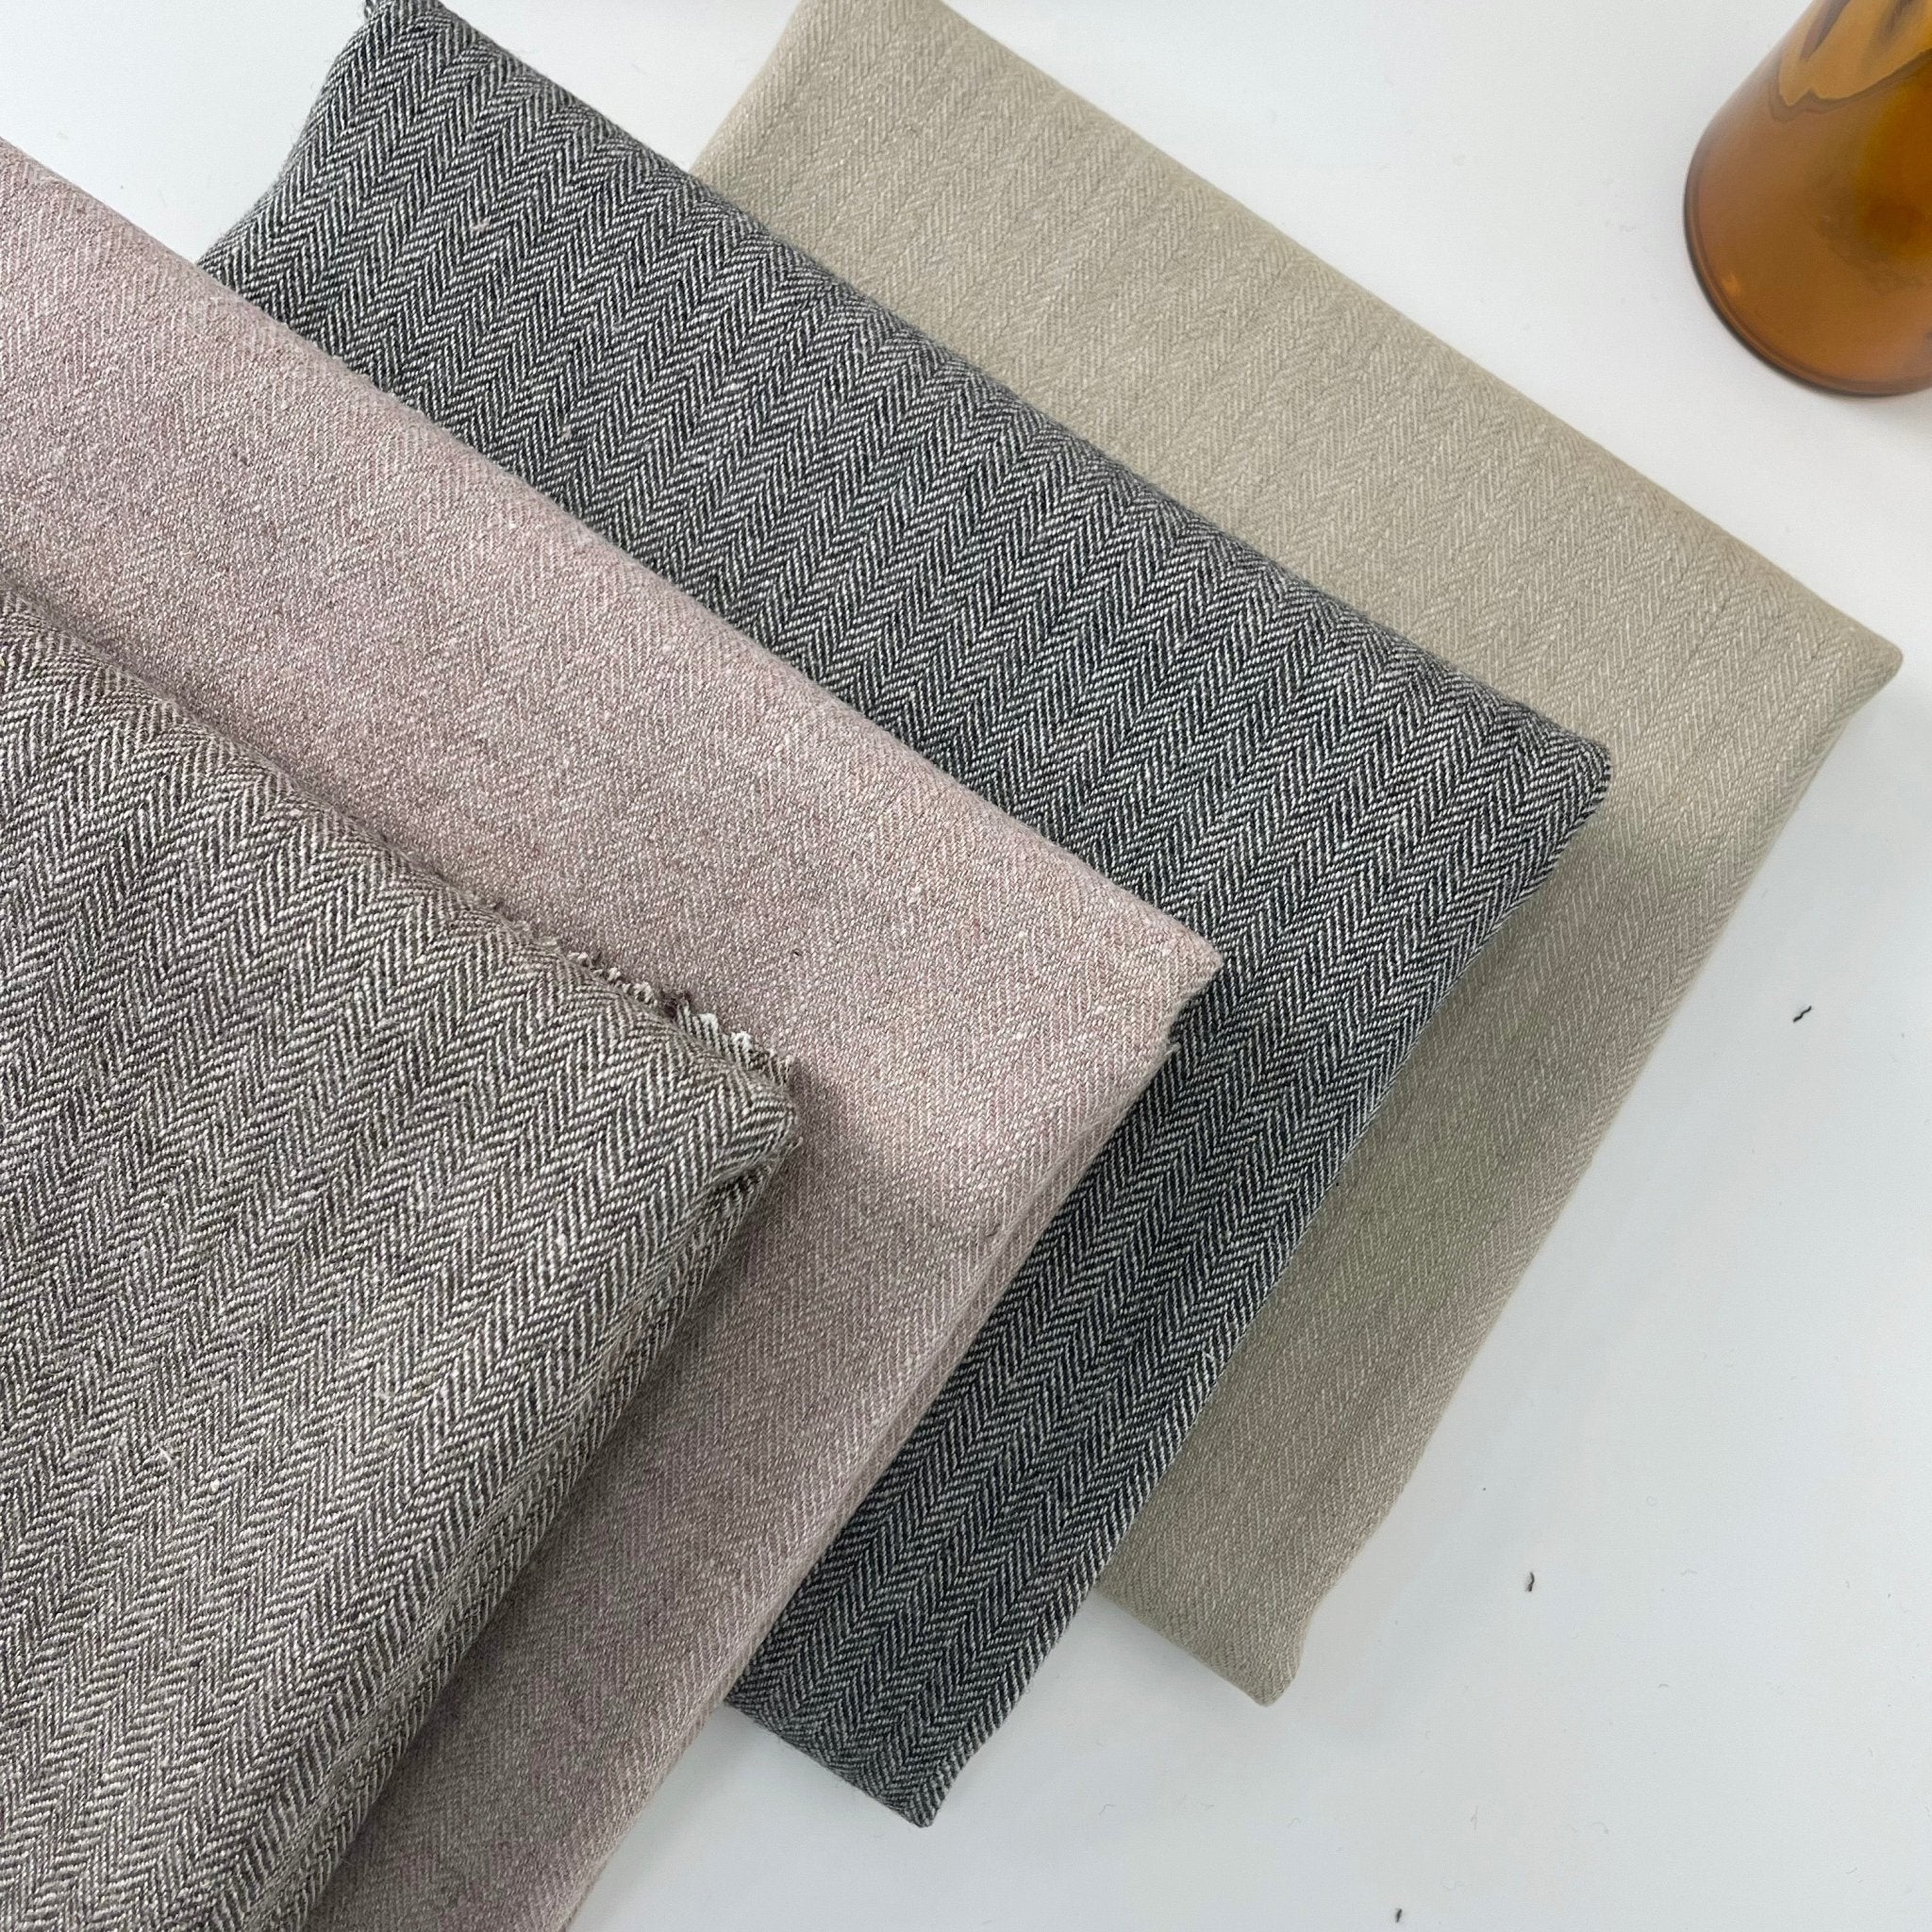 Linen Nylon Wool HBT Fabric 7009 7004 7013 7010 - The Linen Lab - 7013 D/PINK